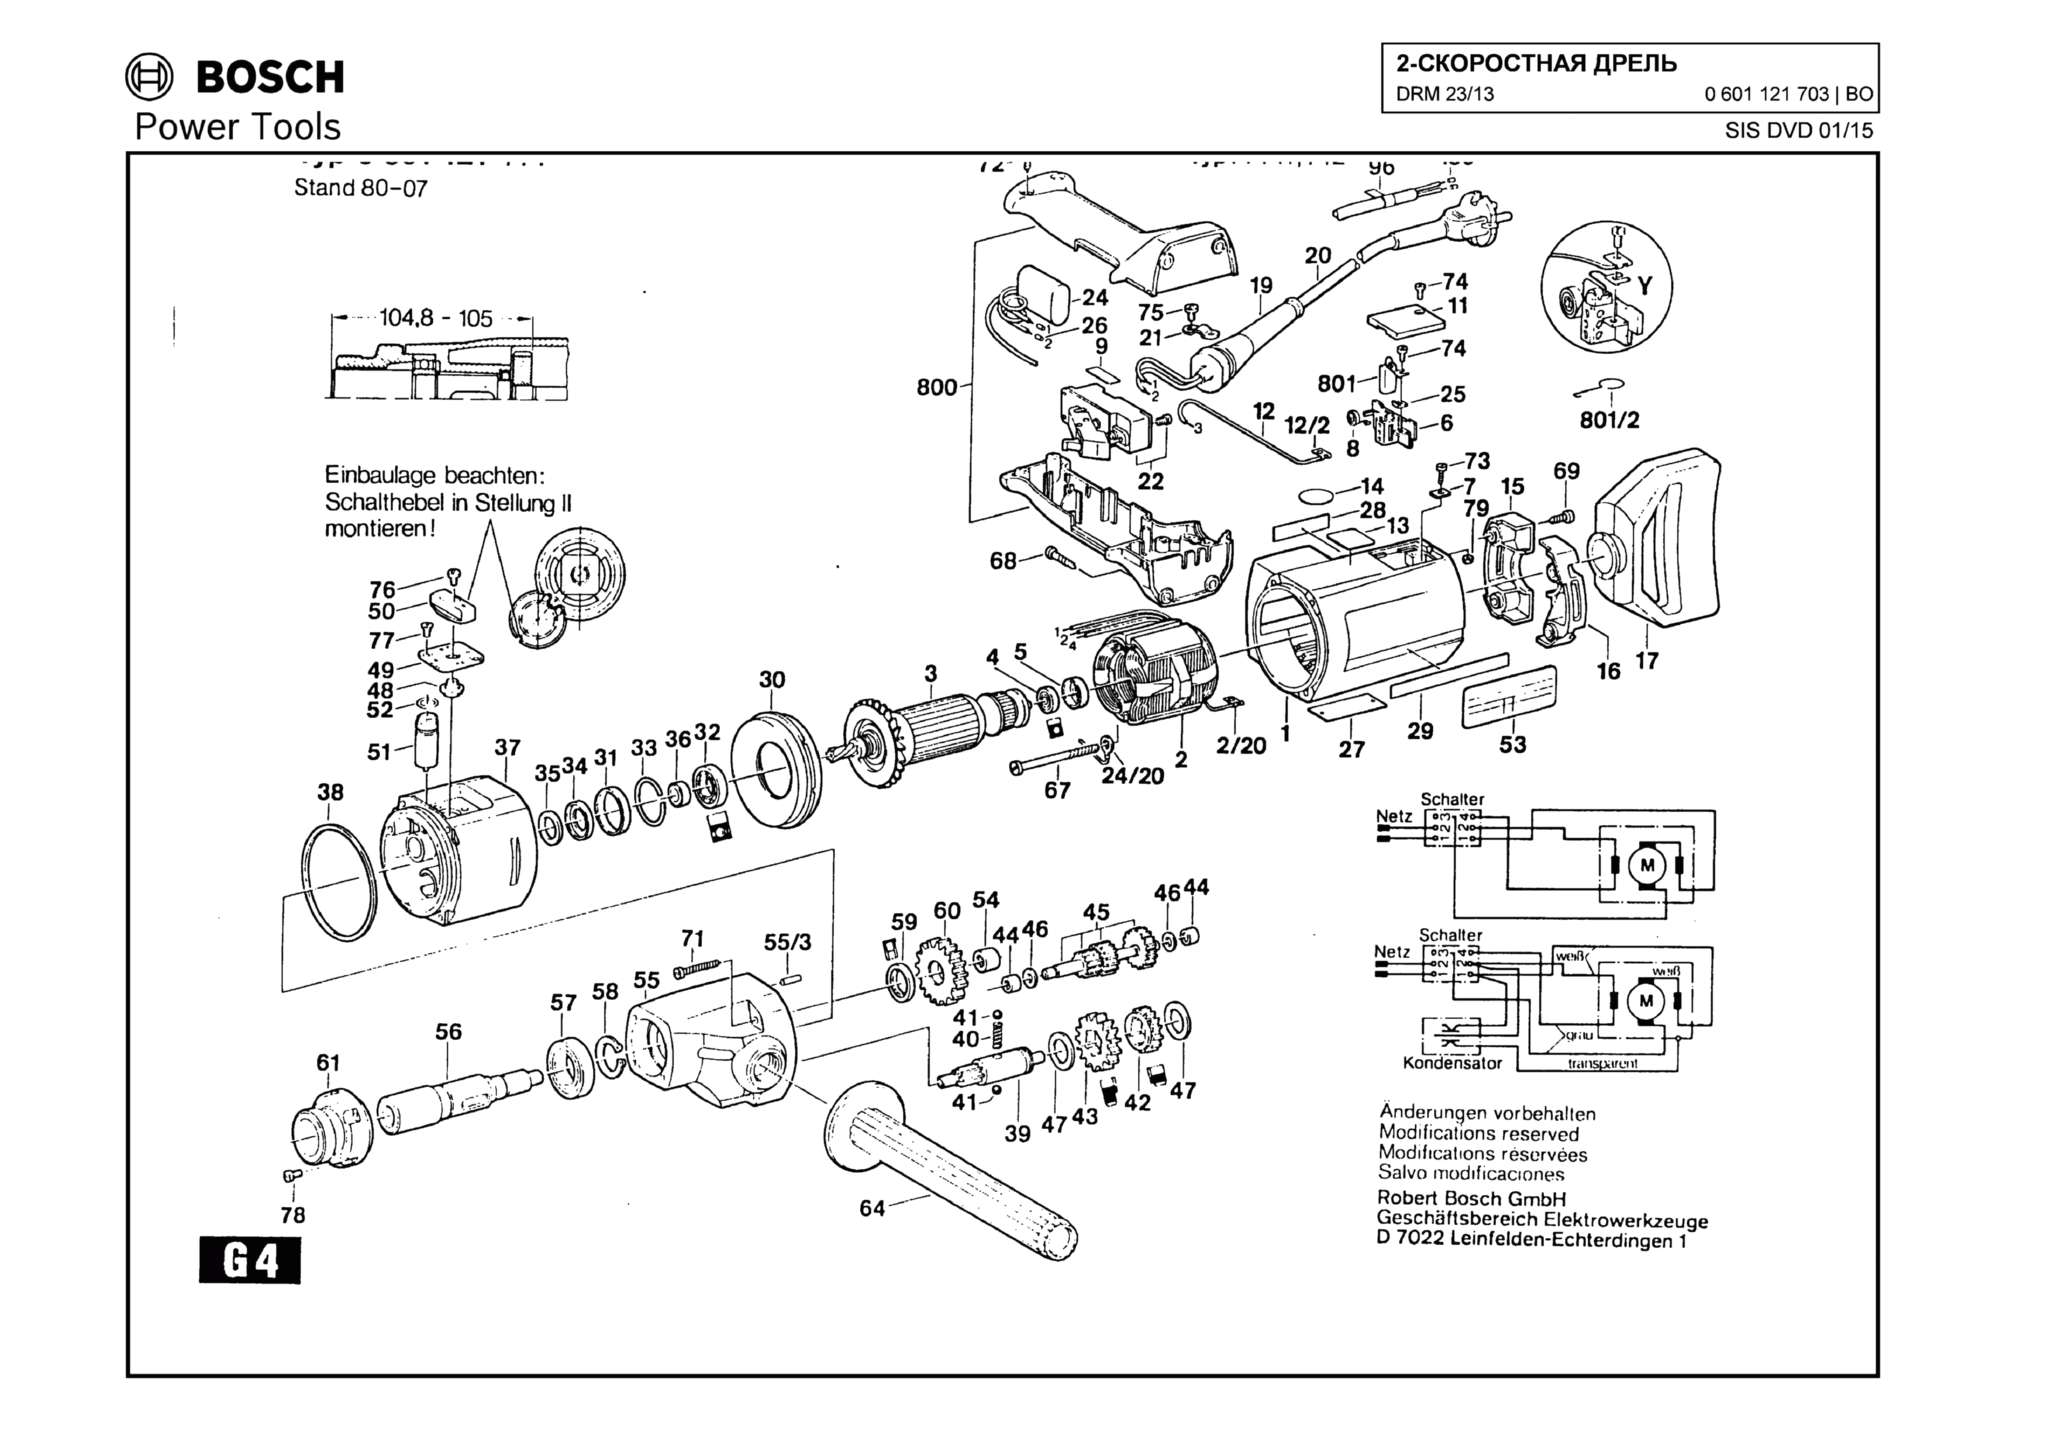 Запчасти, схема и деталировка Bosch DRM 23/13 (ТИП 0601121703)